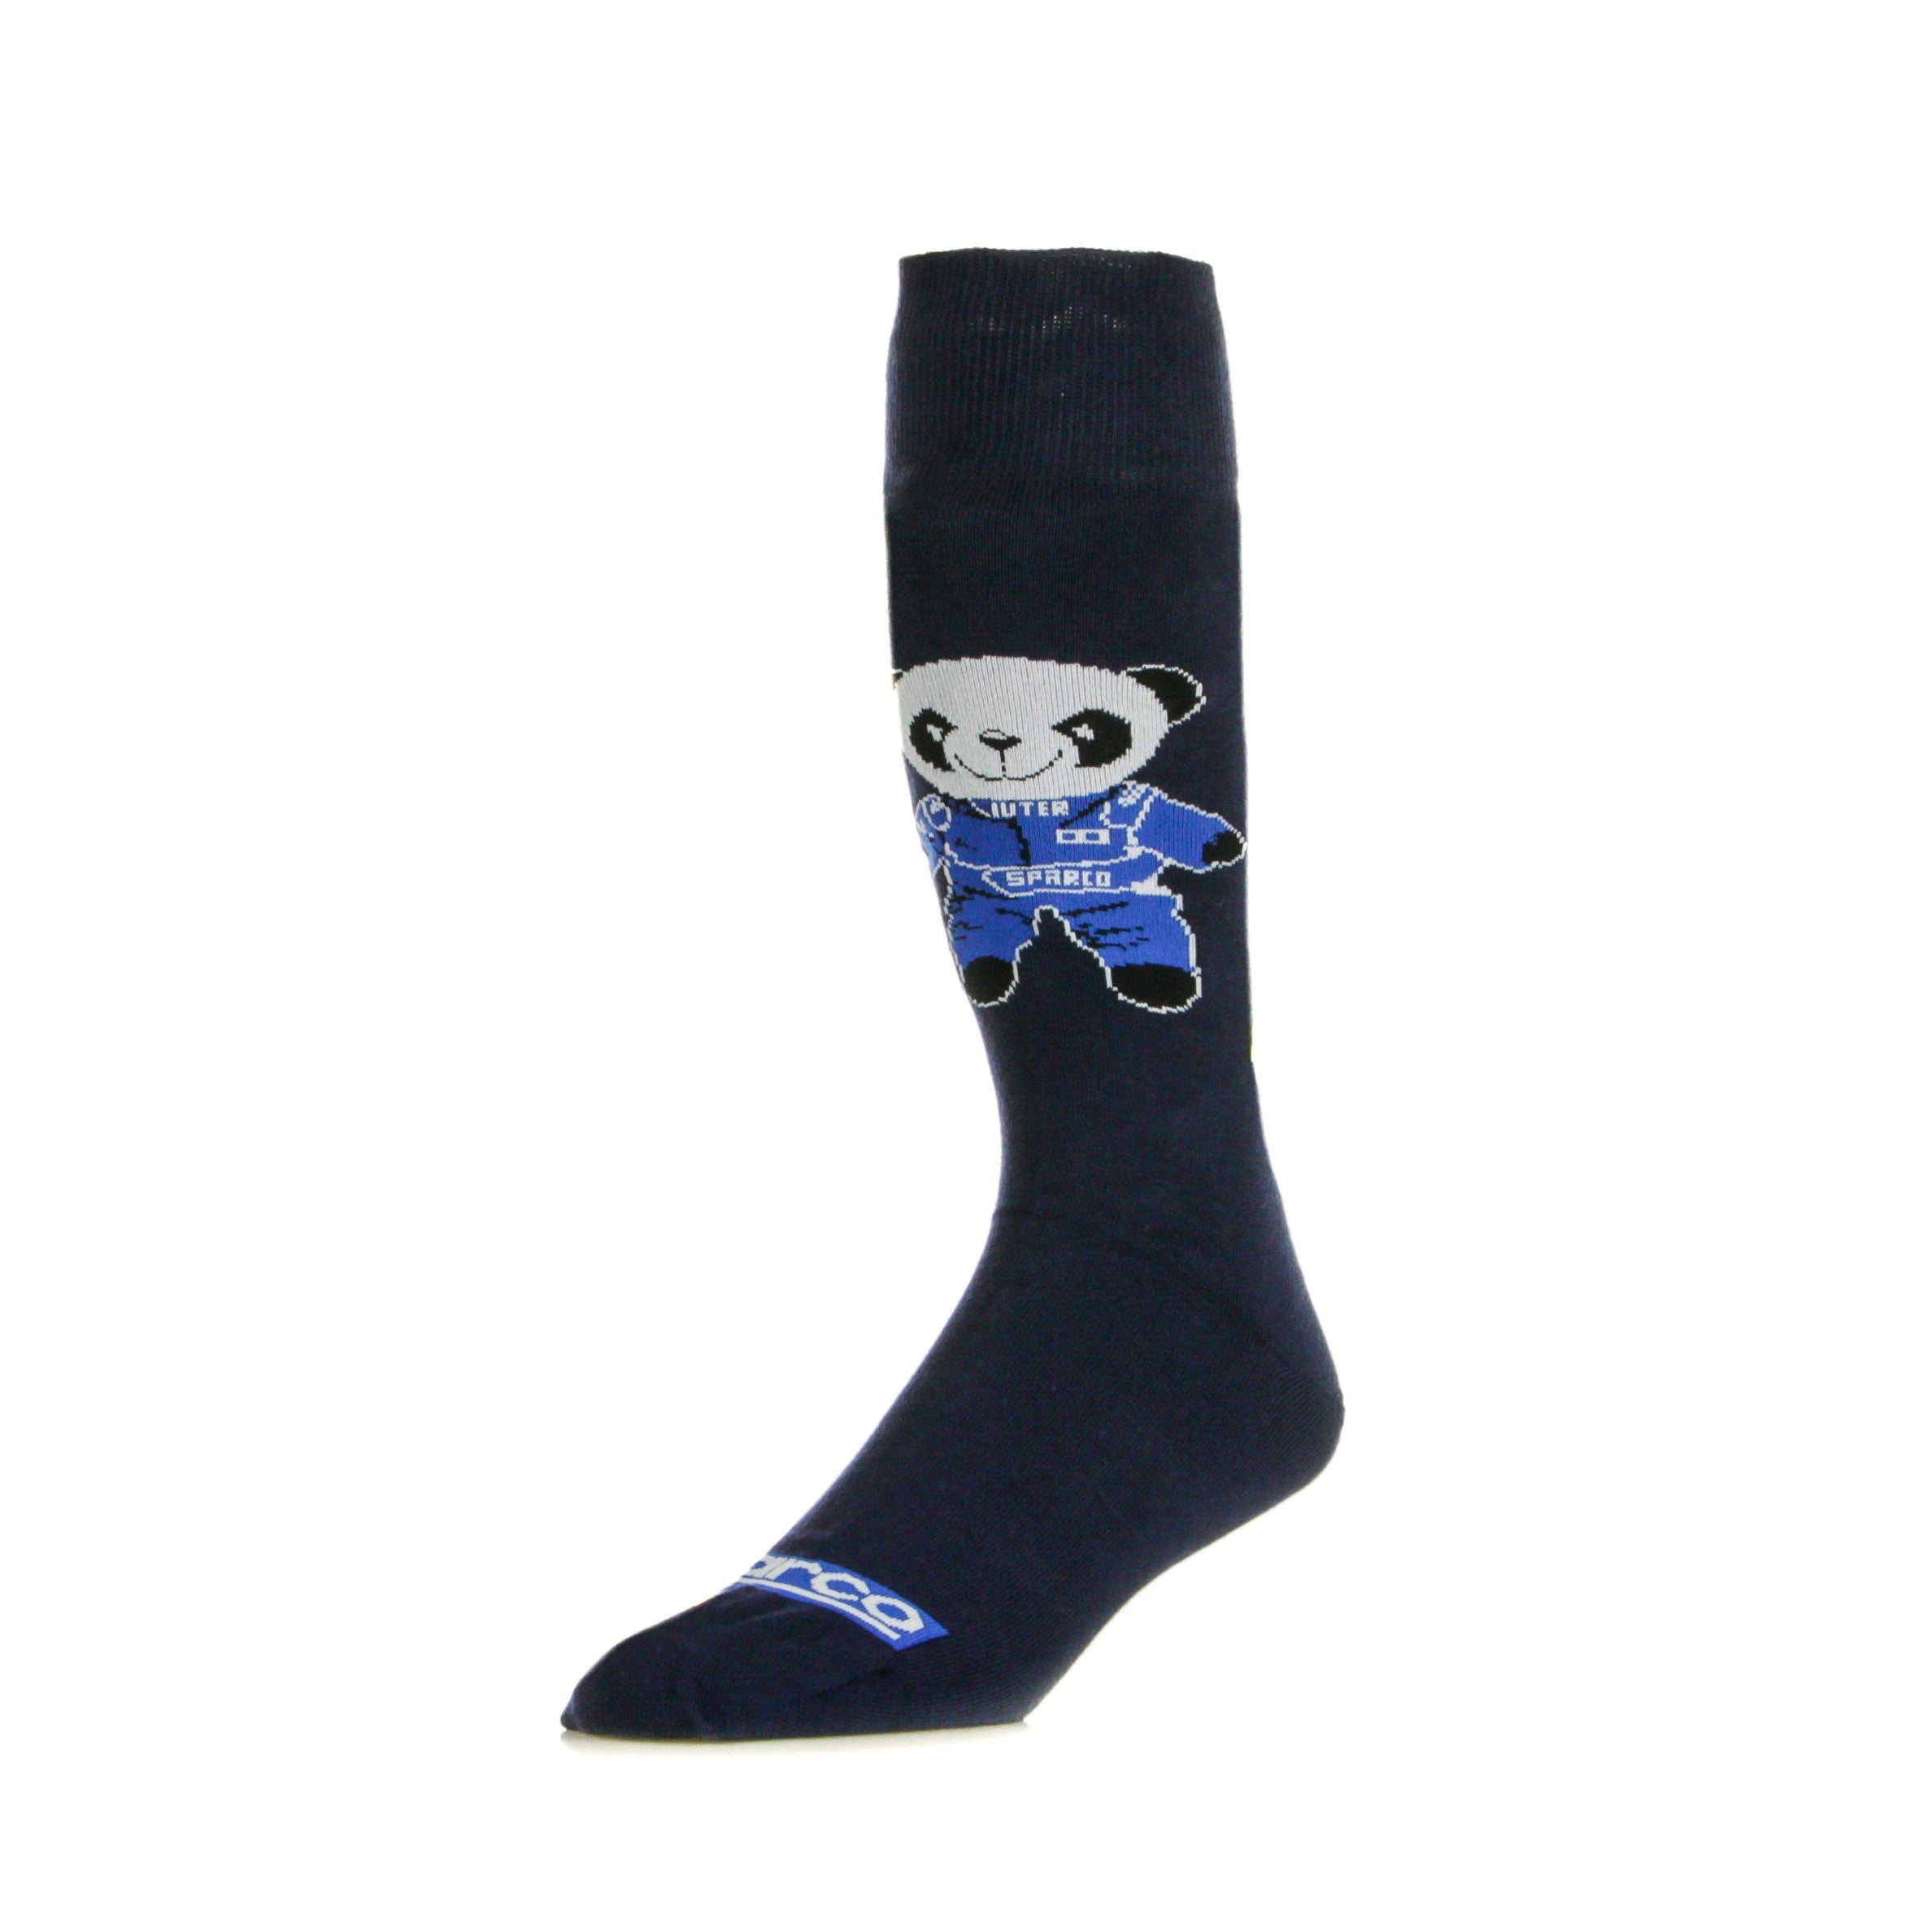 Sparky Socks Men's Medium Sock